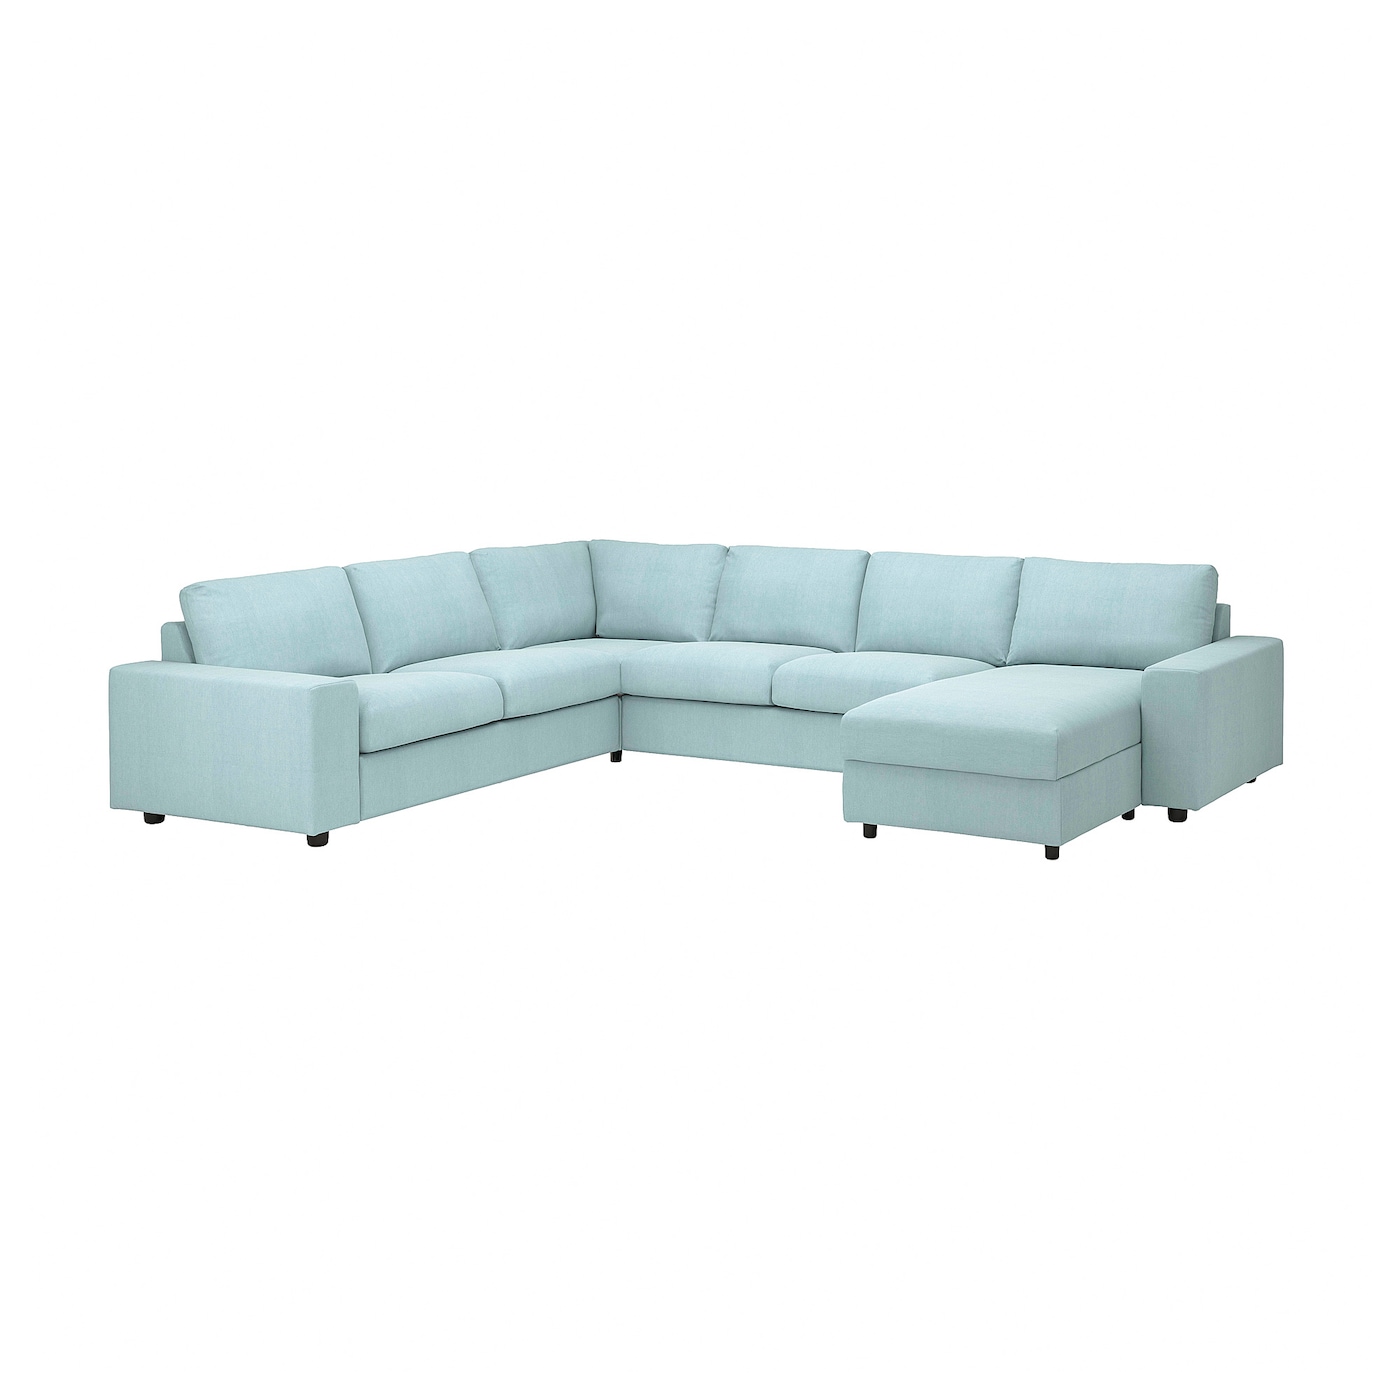 ВИМЛЕ Диван угловой, 5-местный. диван+диван, с широкими подлокотниками/Саксемара светло-синий VIMLE IKEA диван угловой баден next с подлокотниками